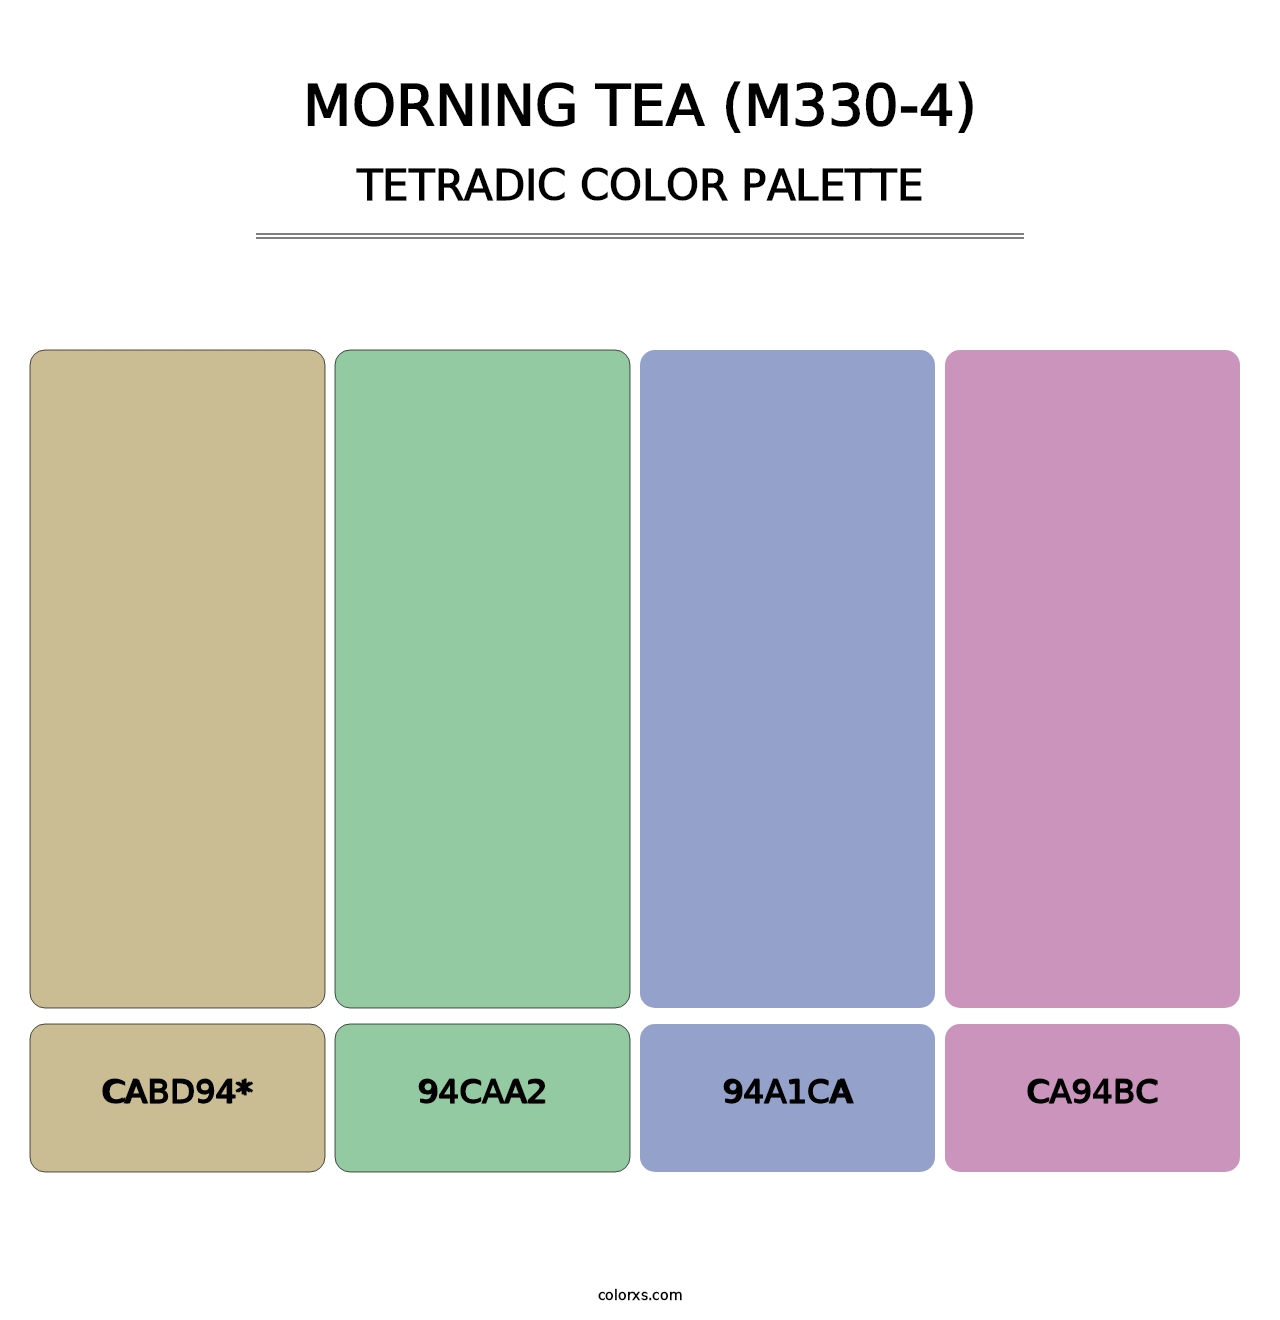 Morning Tea (M330-4) - Tetradic Color Palette